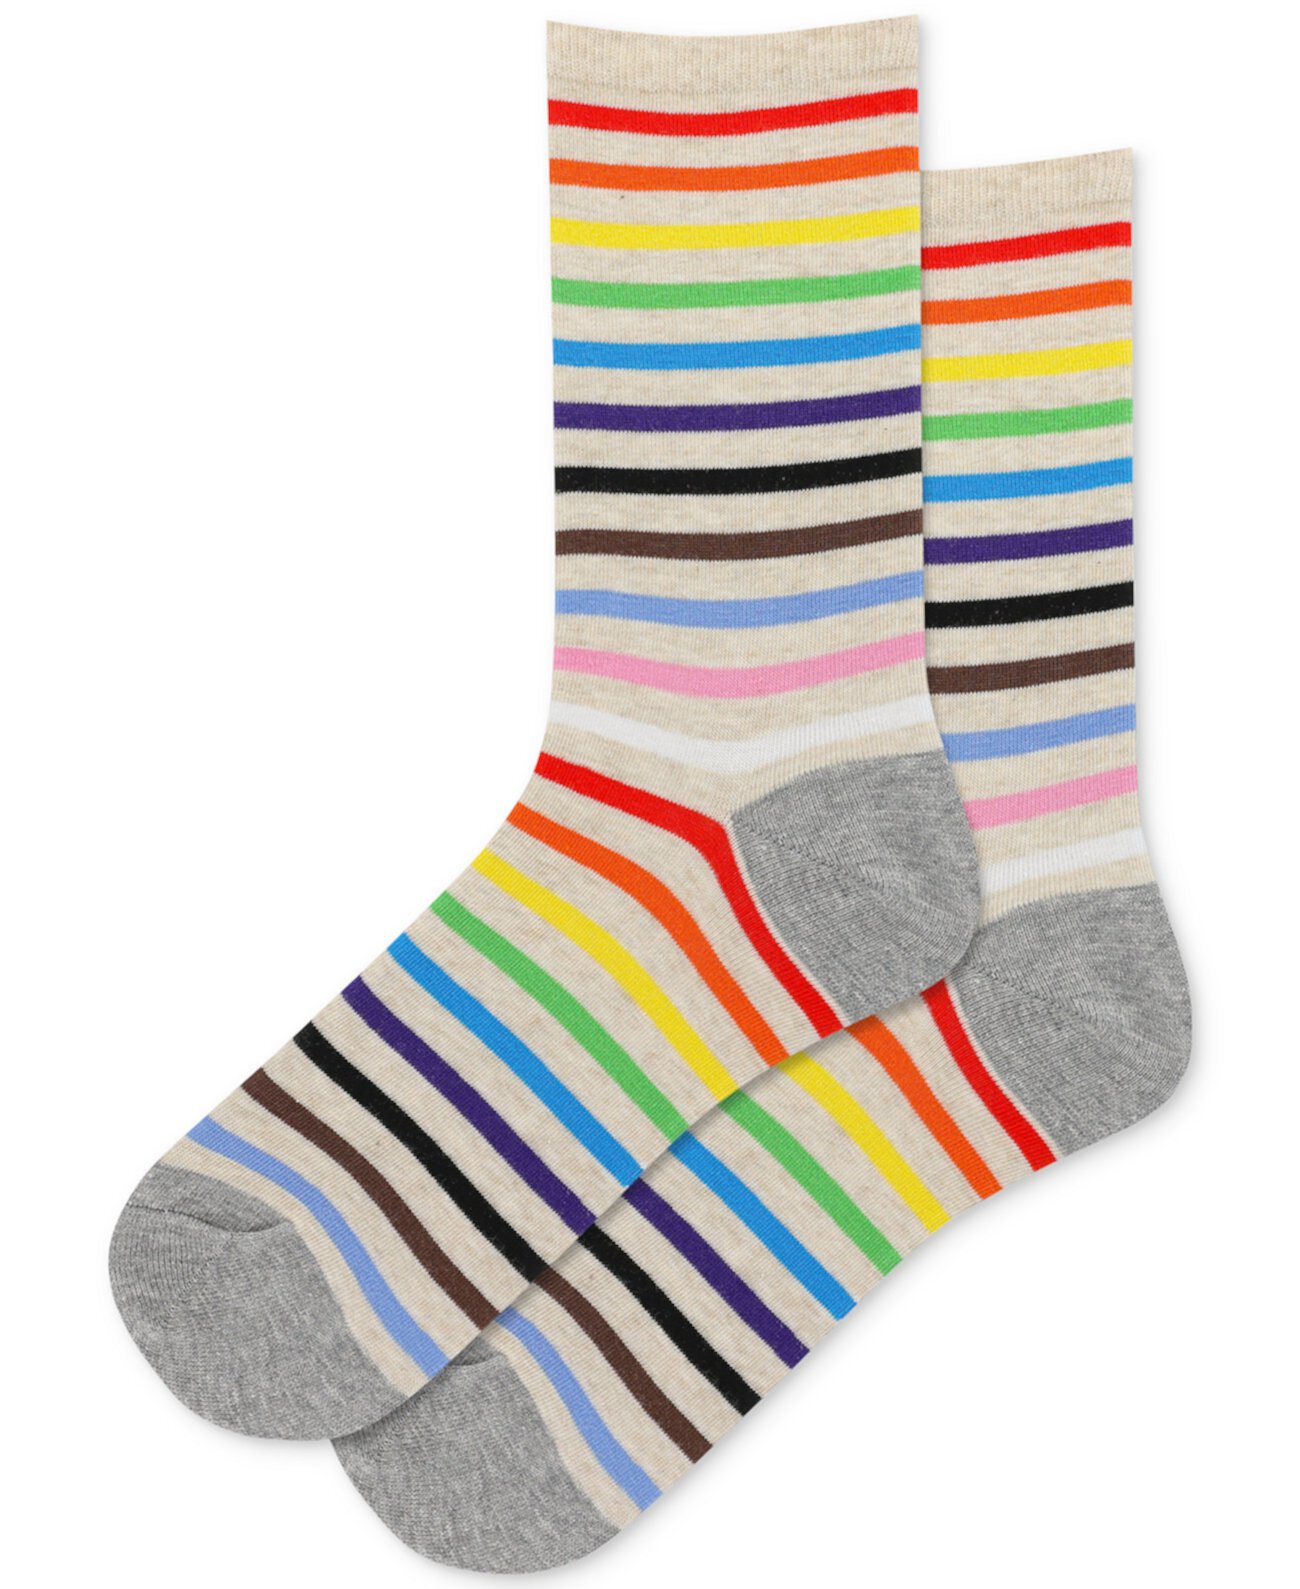 Women's Rainbow Striped Crew Socks Hot Sox